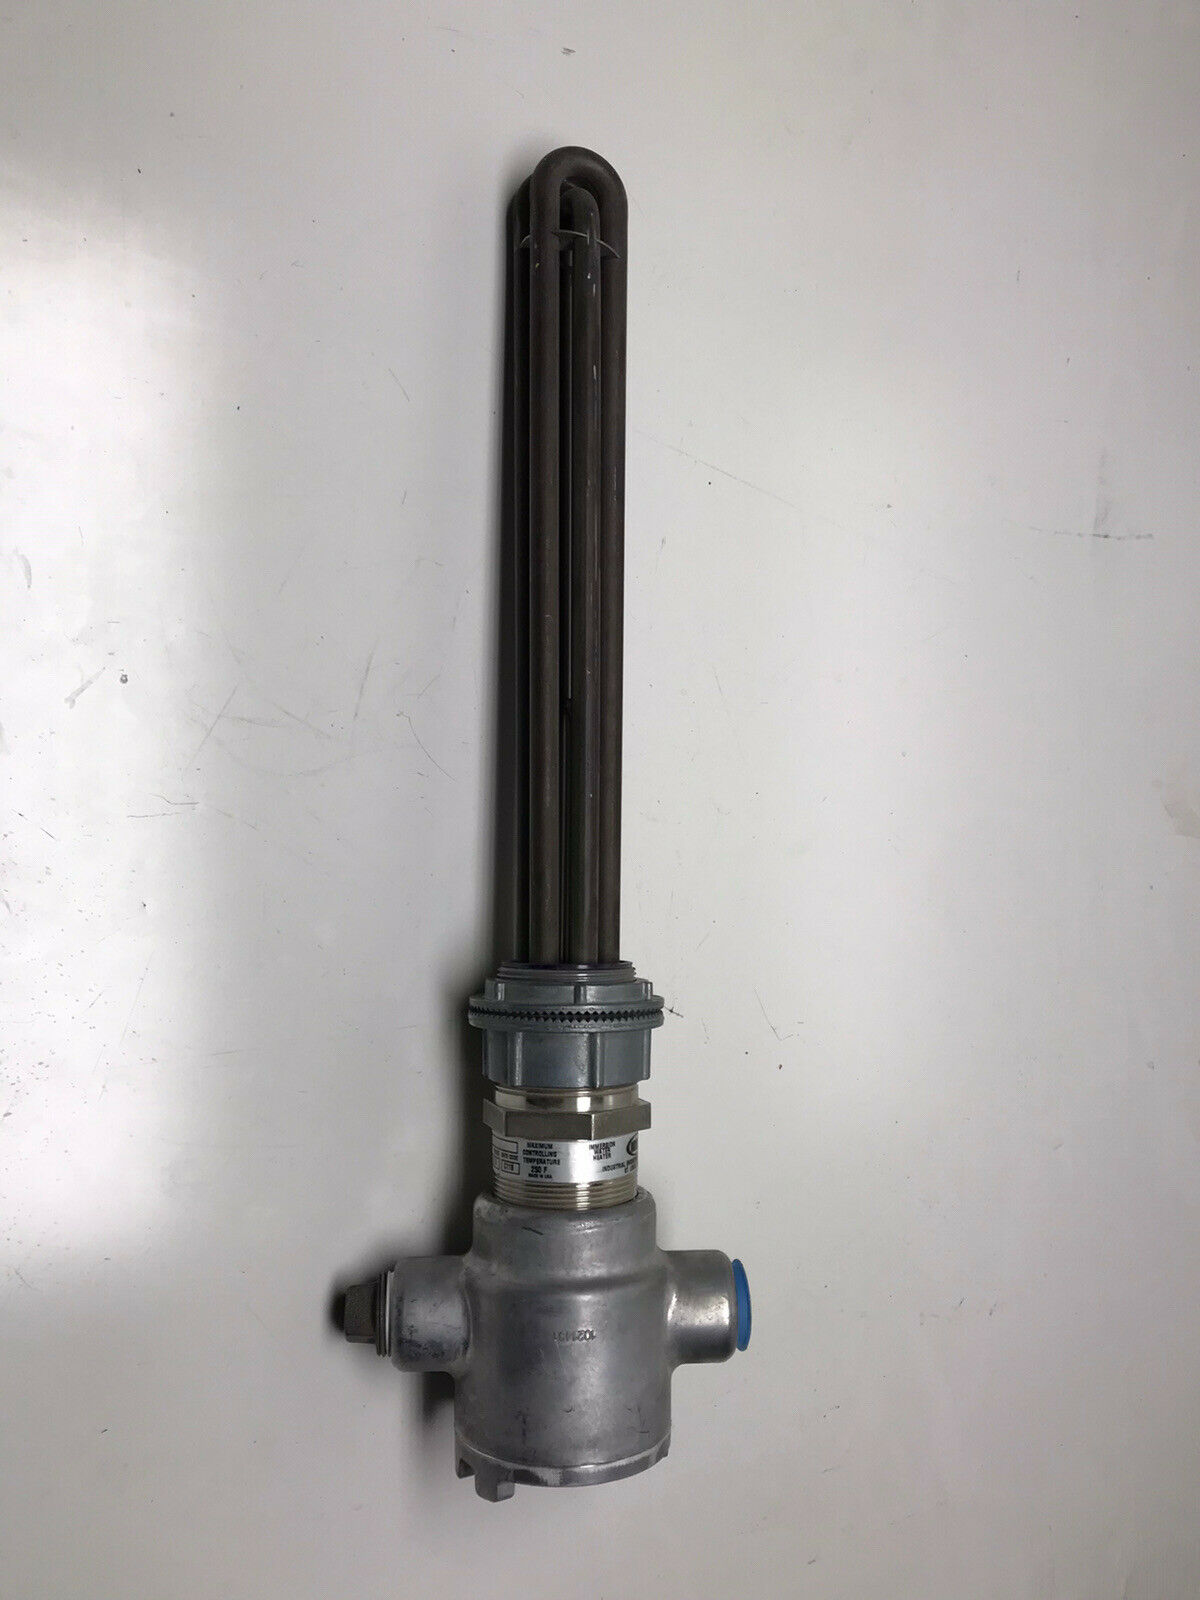 Indeeco M713 Screw Plug Immersion Water Heater 6000 Watt 480v / 3ph 2" Npt